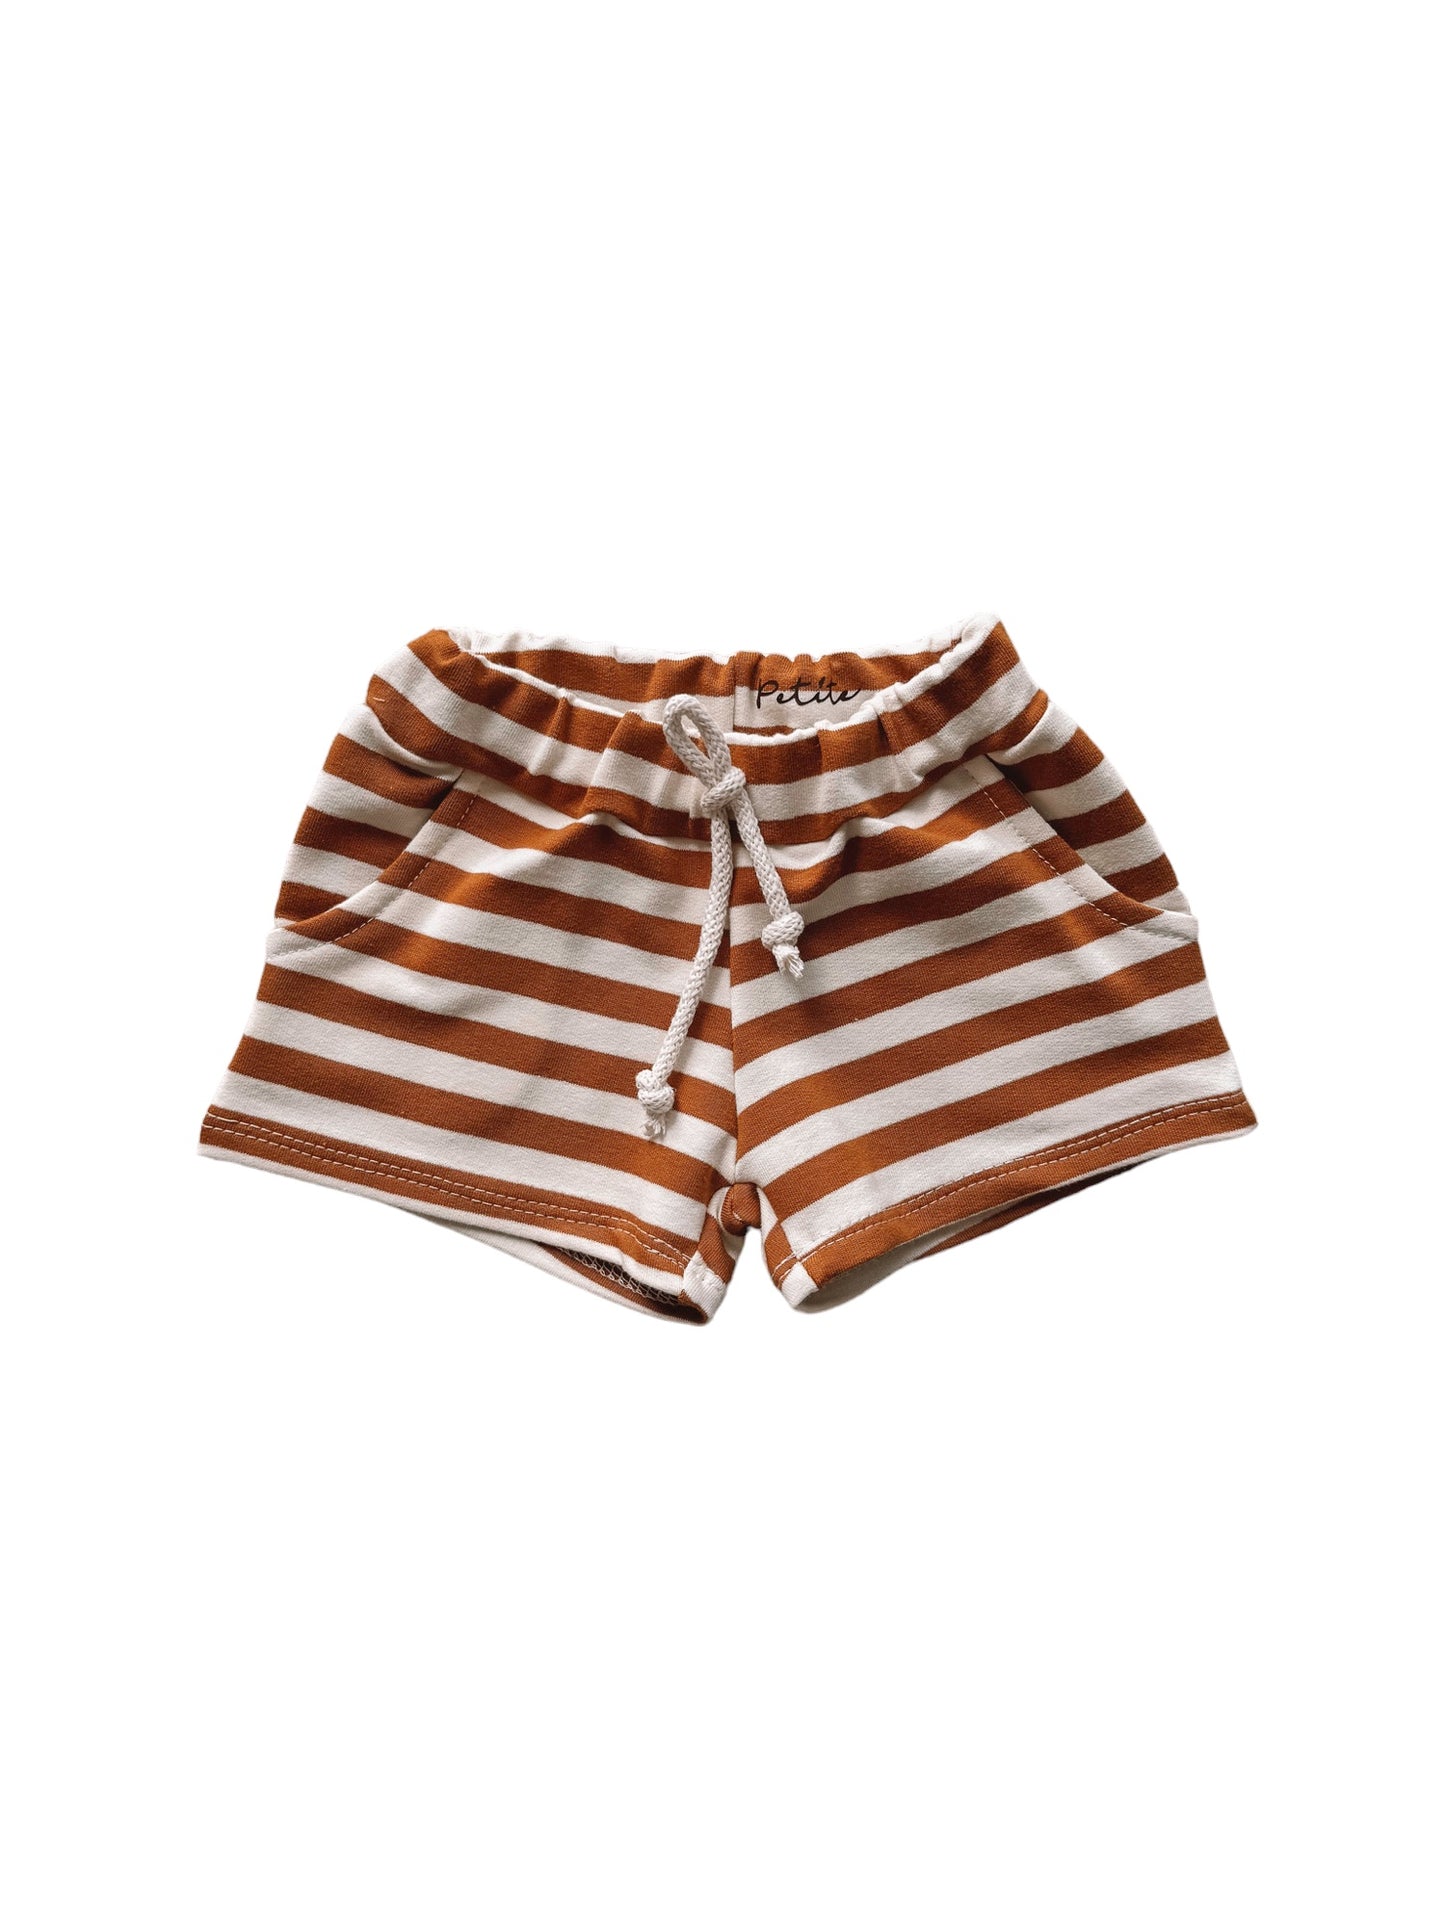 Cotton shorts / burnt orange